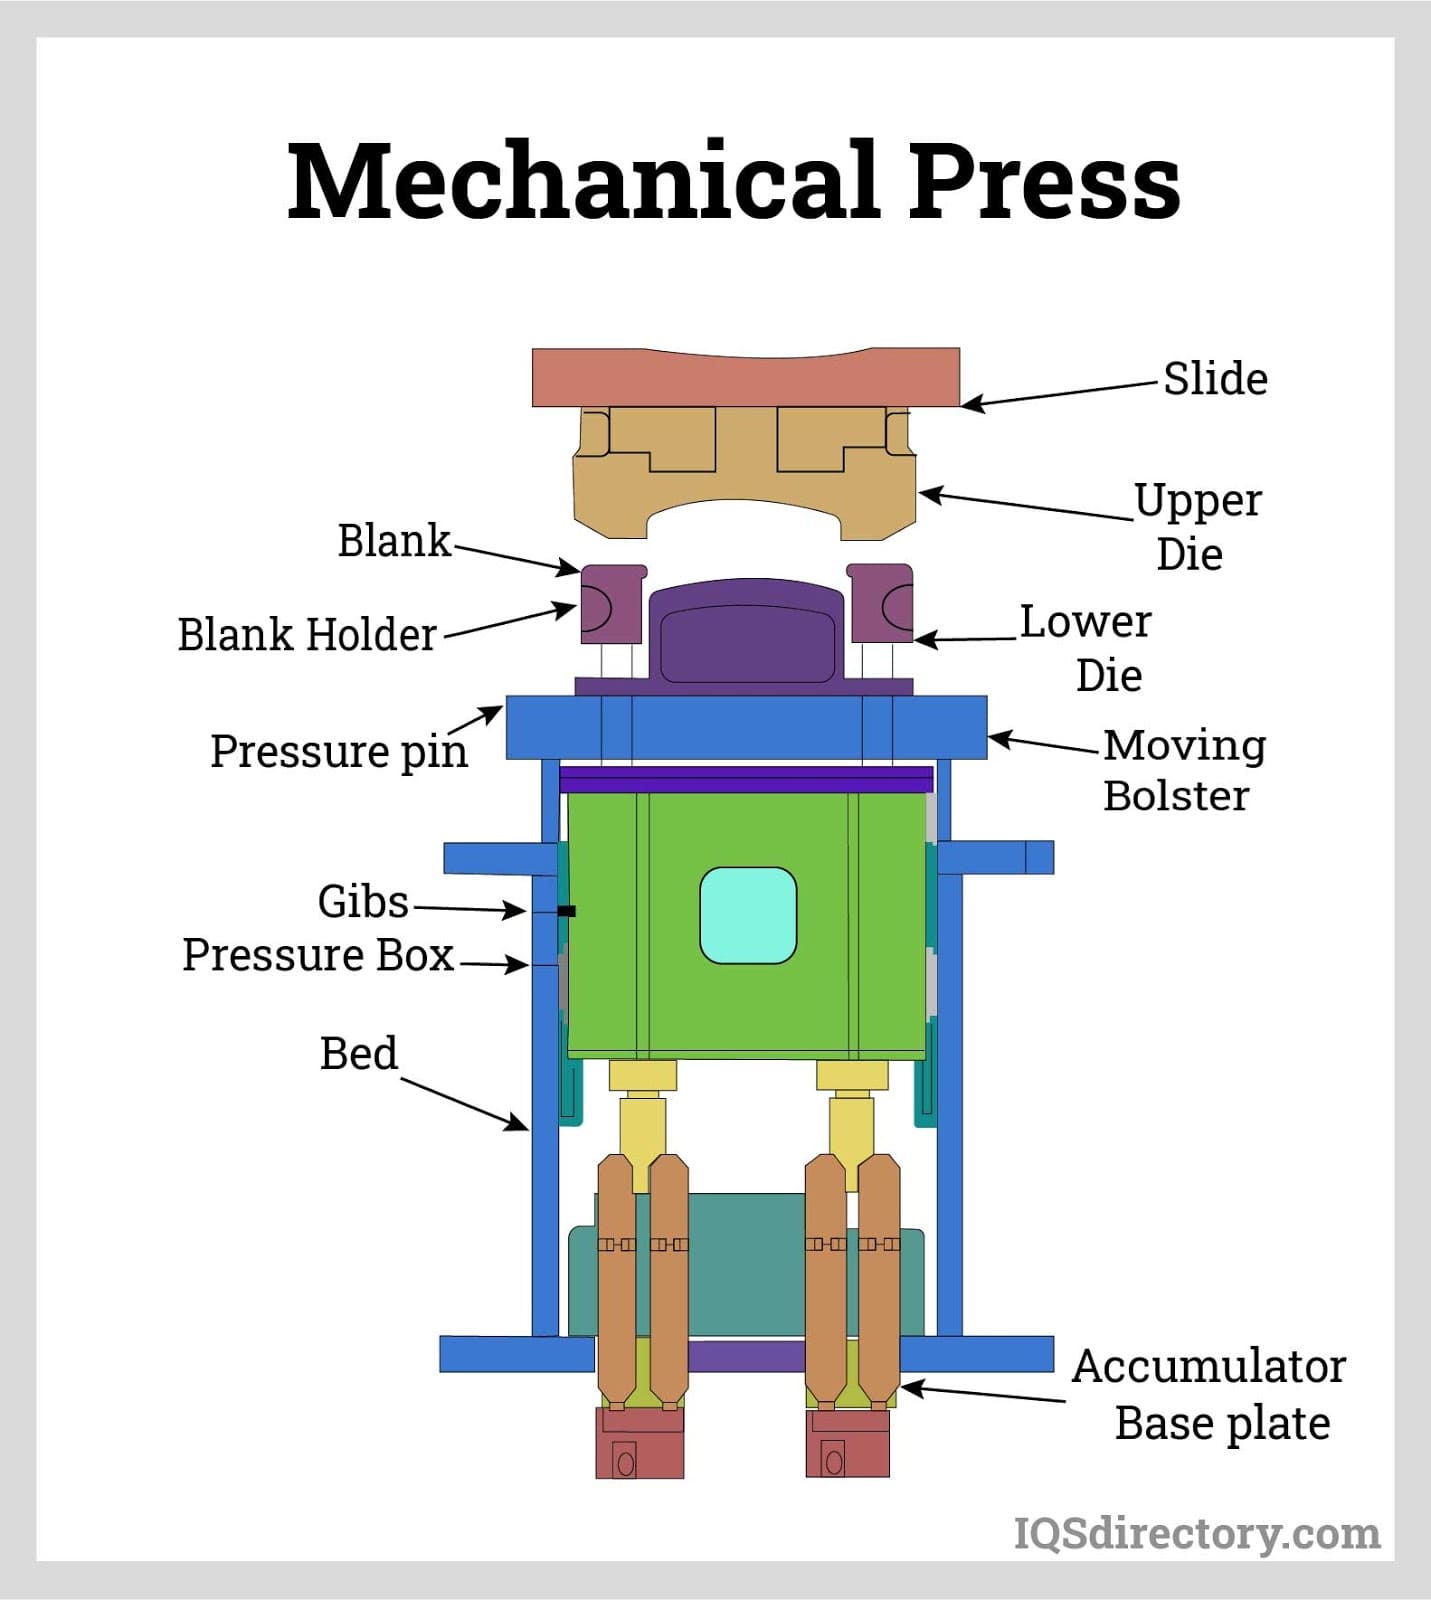 Mechanical Press